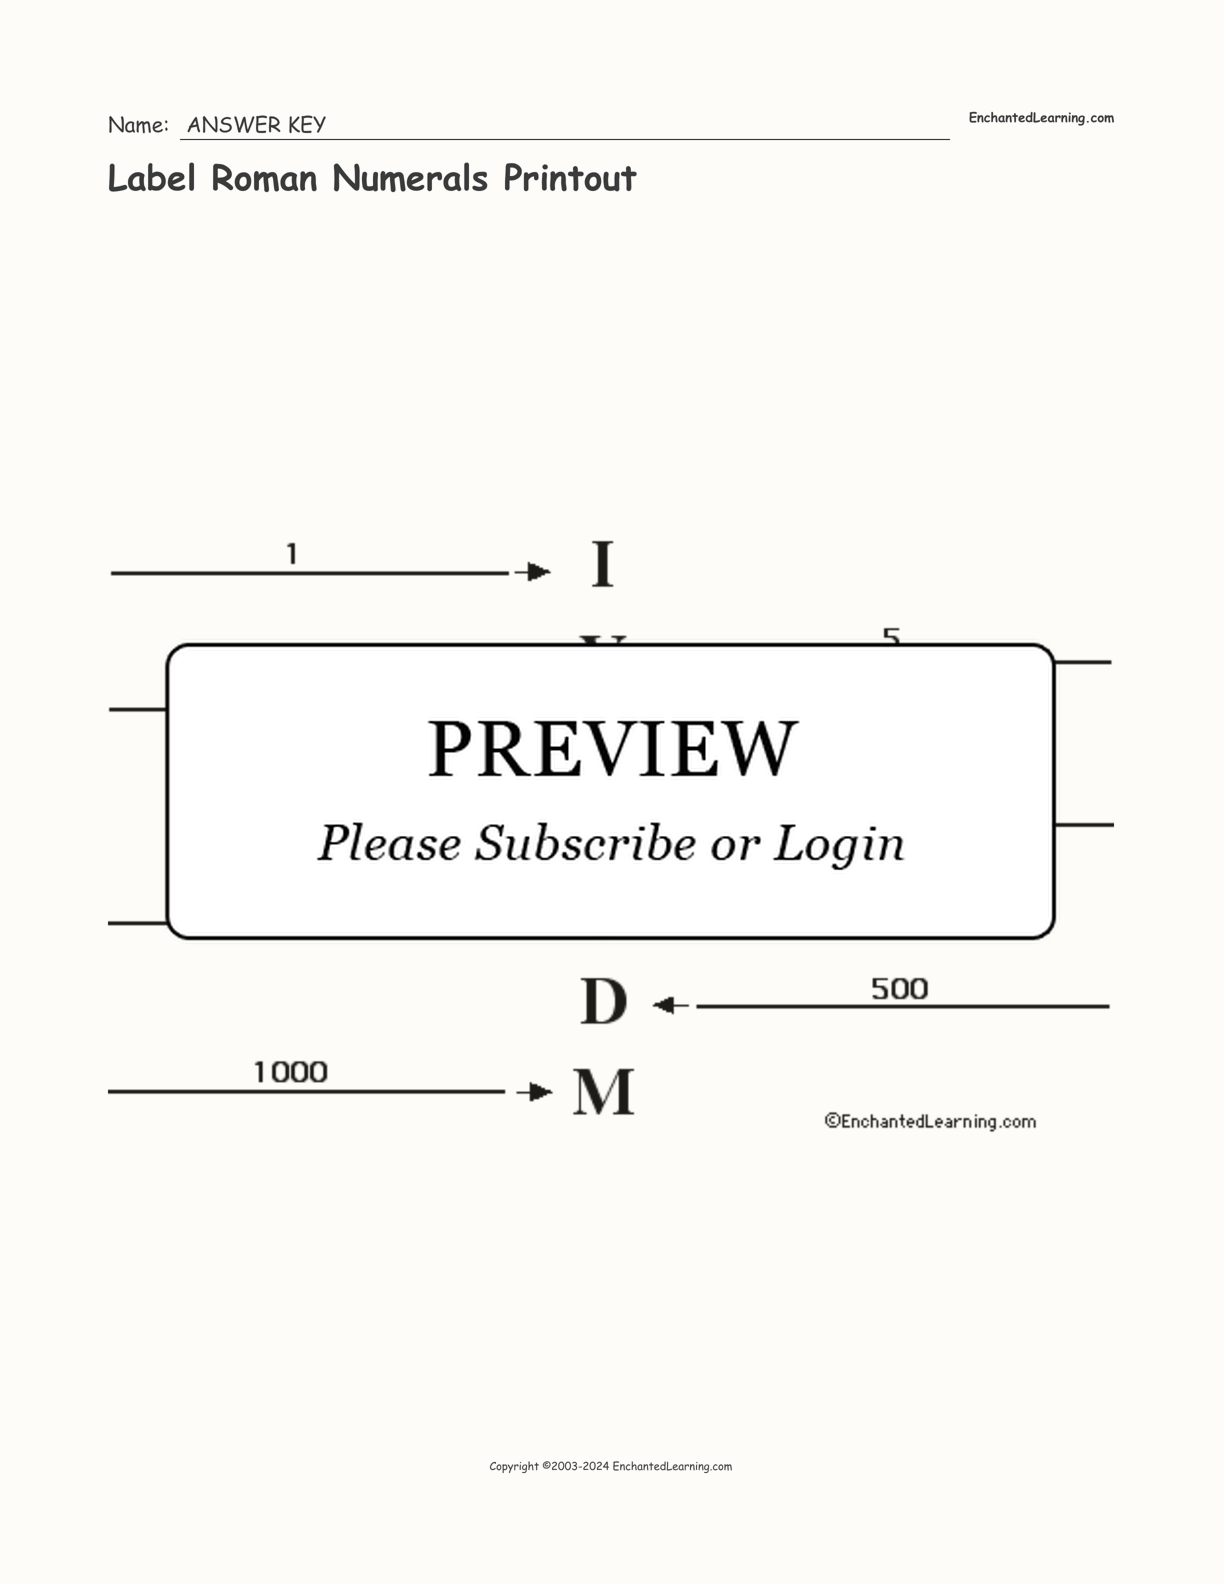 Label Roman Numerals Printout interactive worksheet page 2